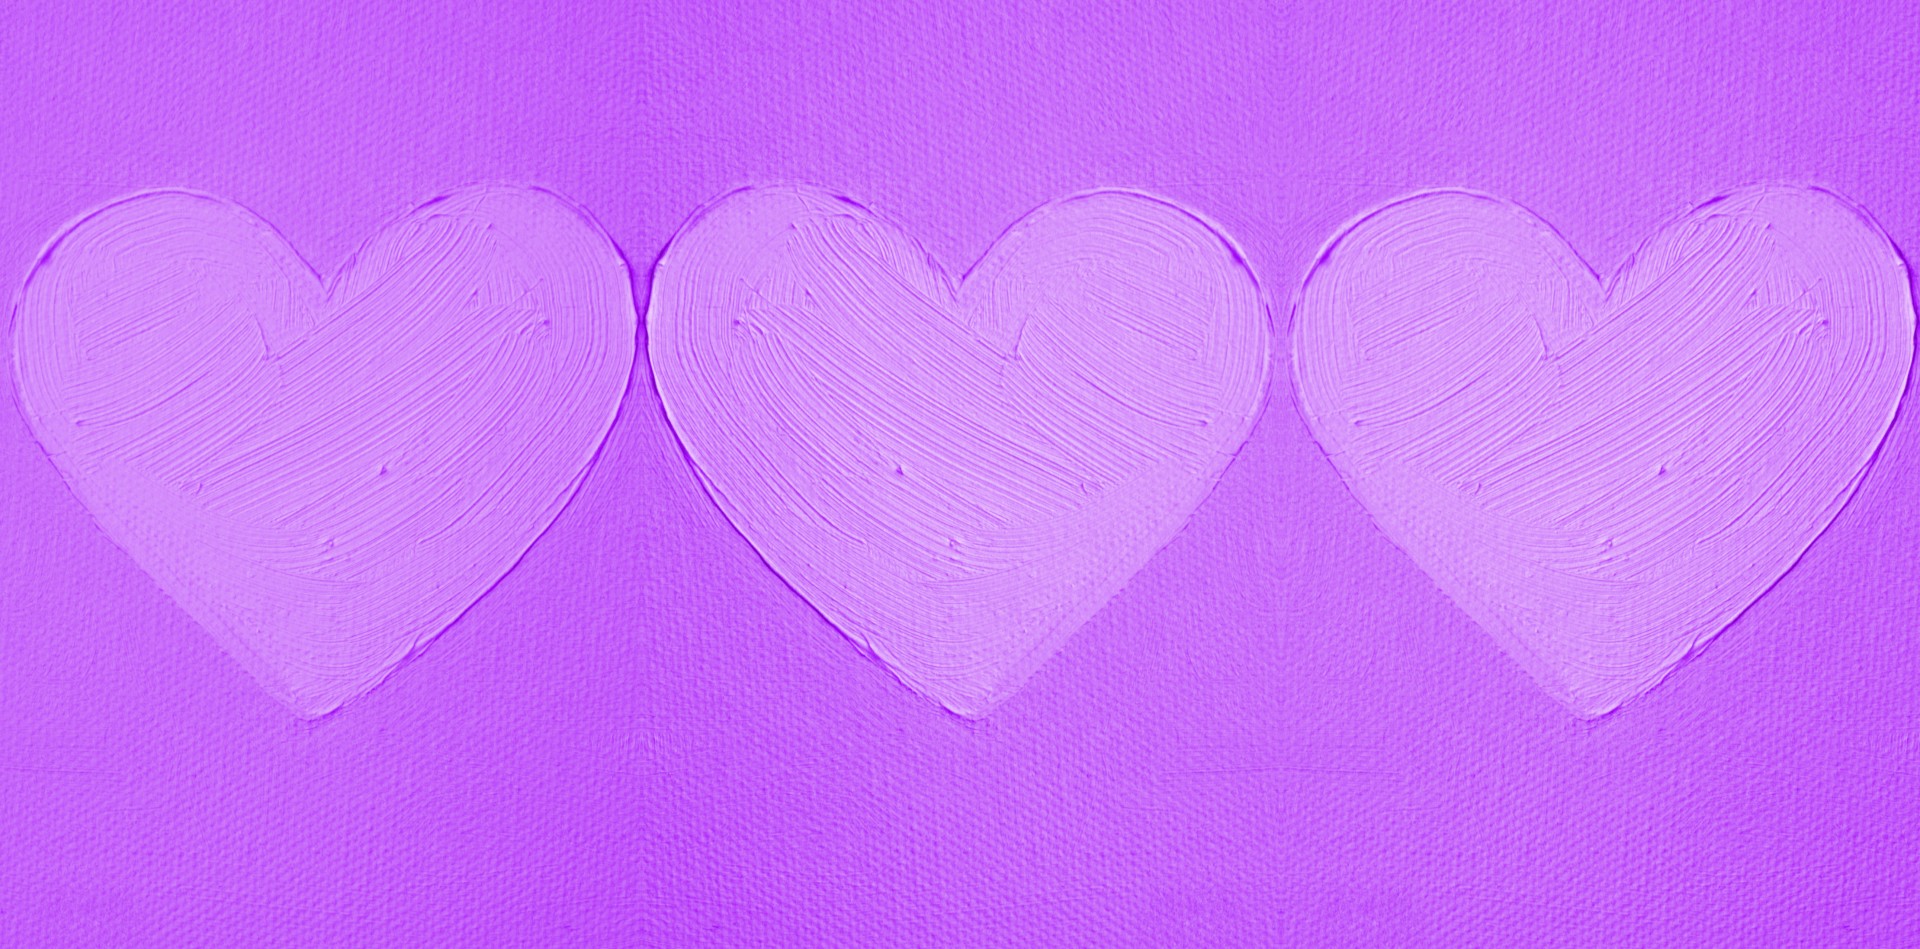 Inimile Triple violet